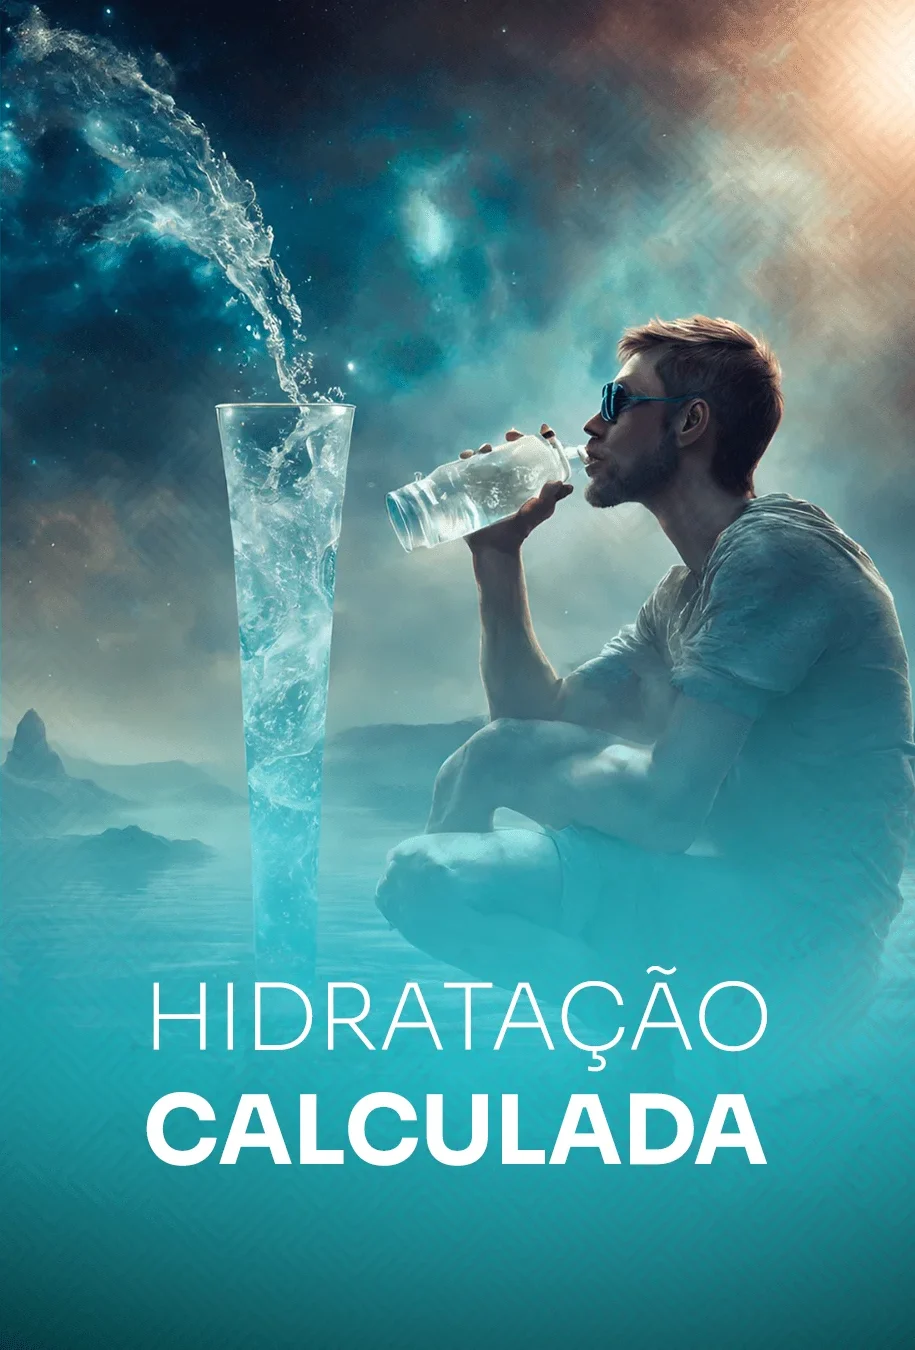 hidratacao-calculada.webp